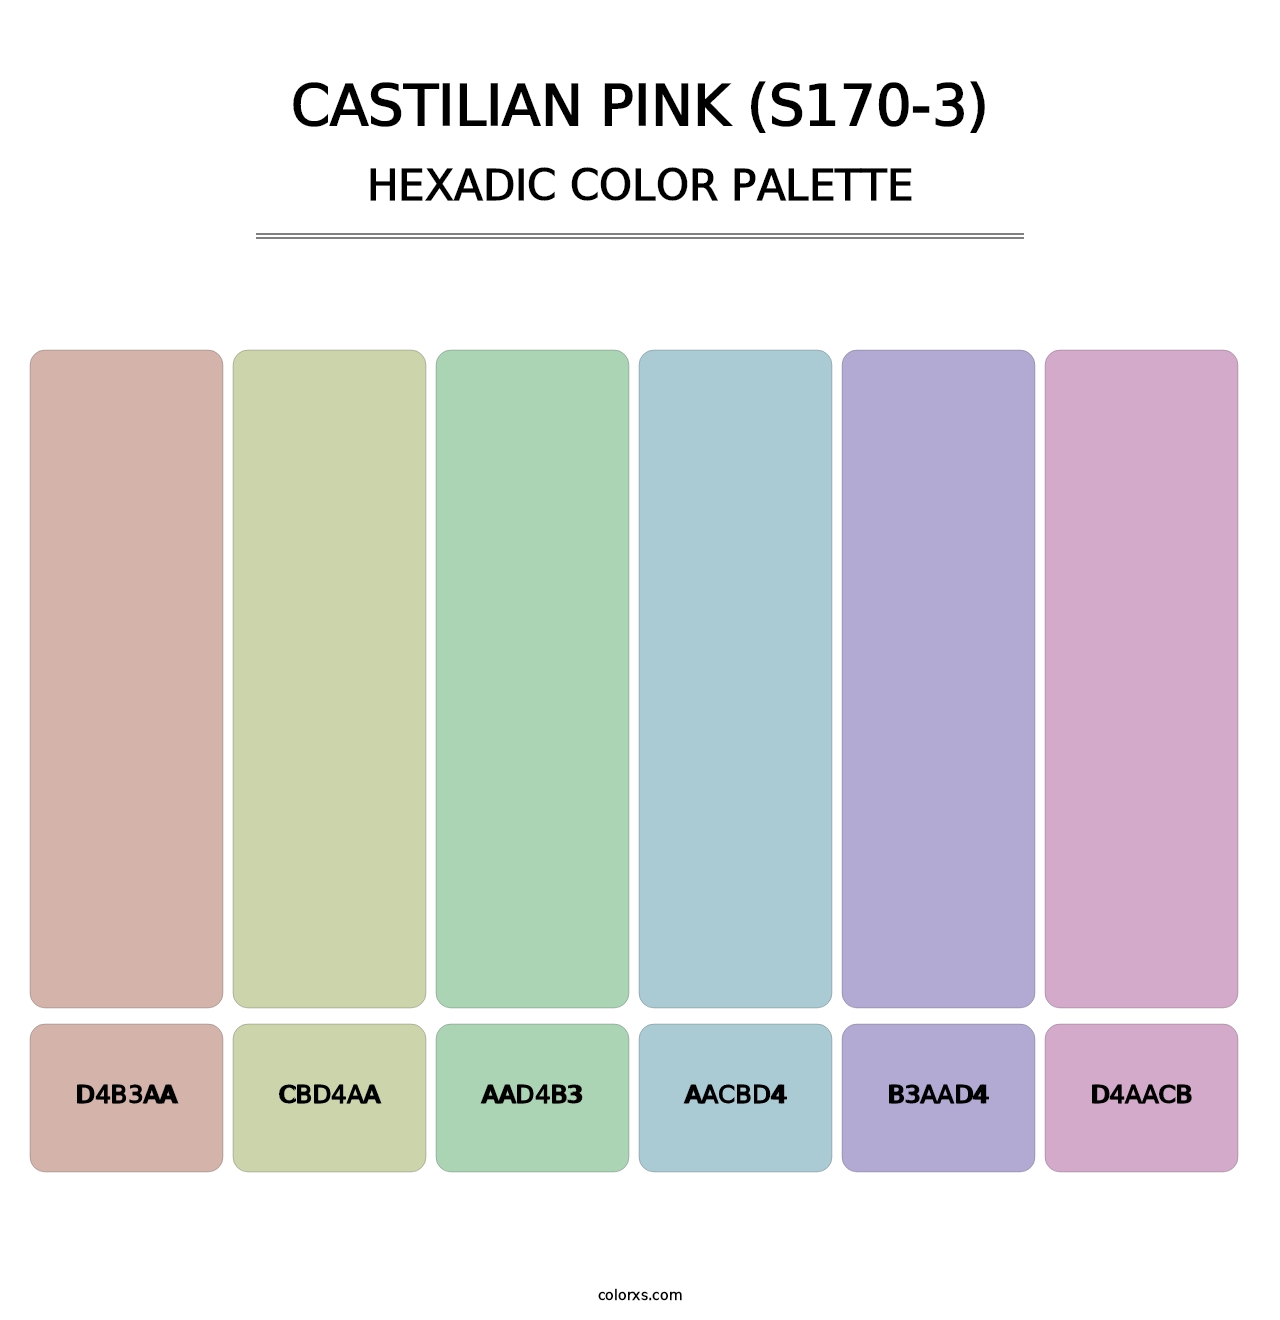 Castilian Pink (S170-3) - Hexadic Color Palette